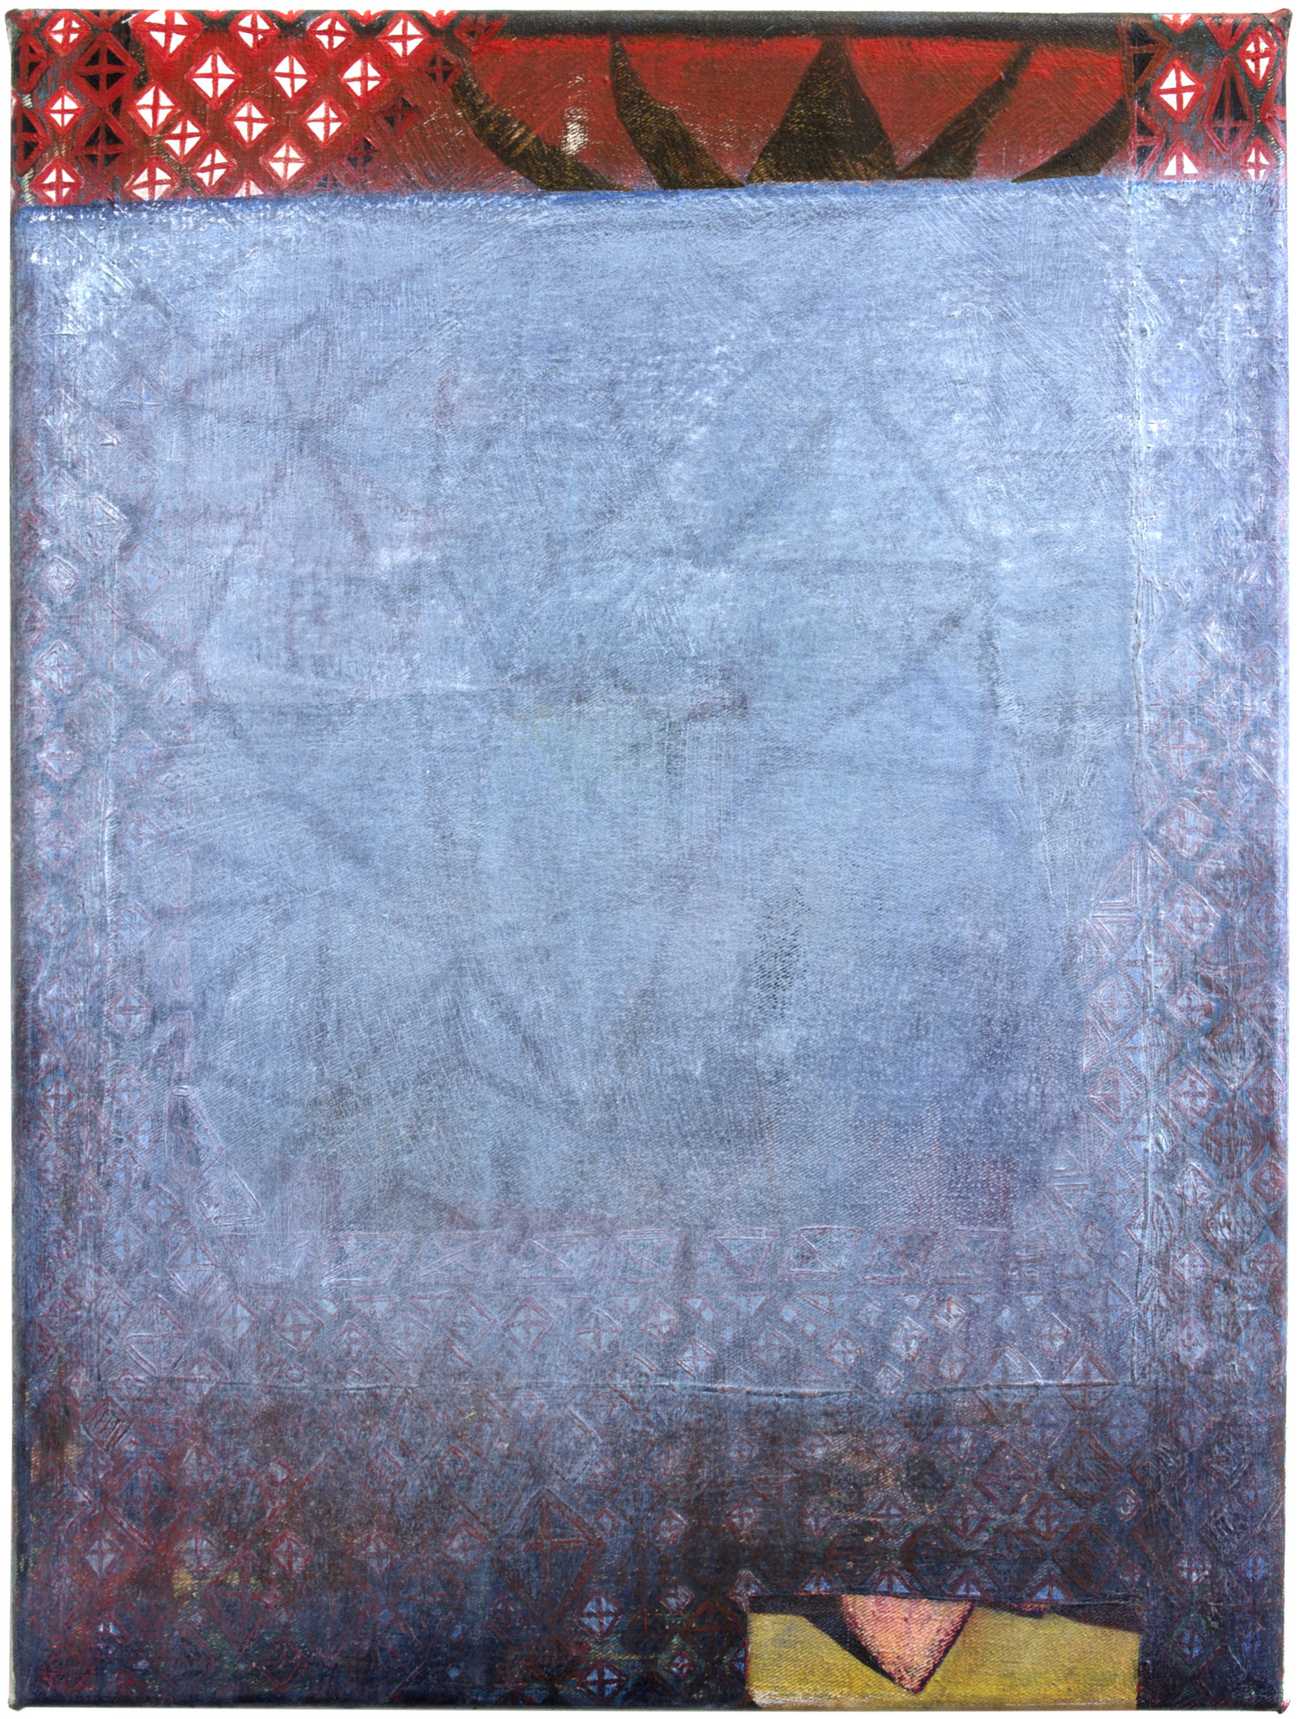 Zipfel | 2018 |oil on canvas | 40 x 30 cm